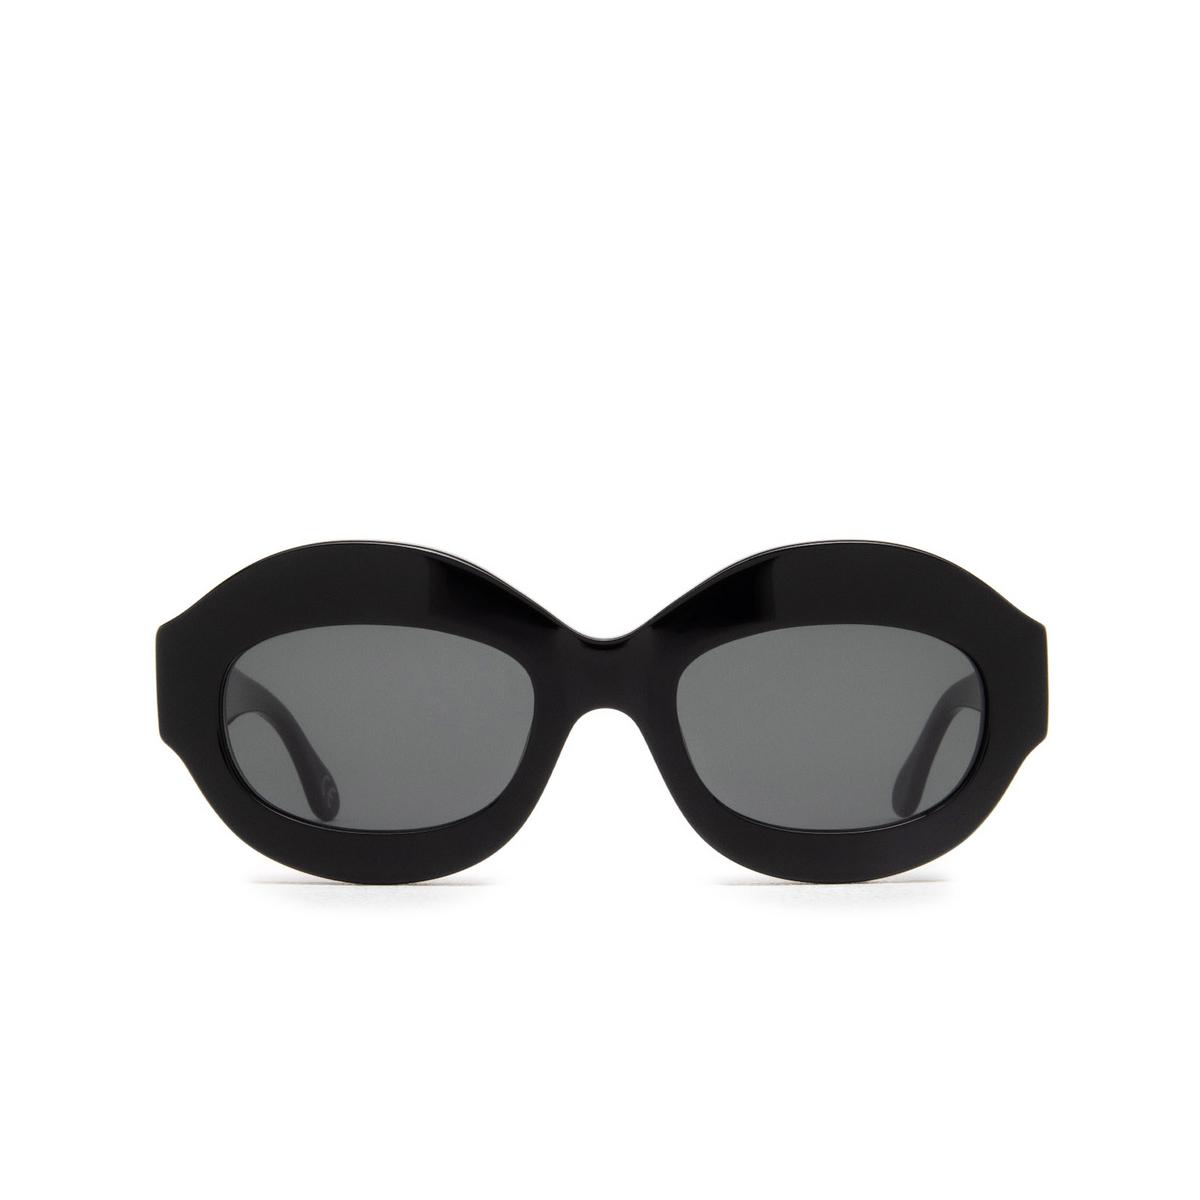 Marni IK KIL CENOTE Sunglasses 4IE Black - front view